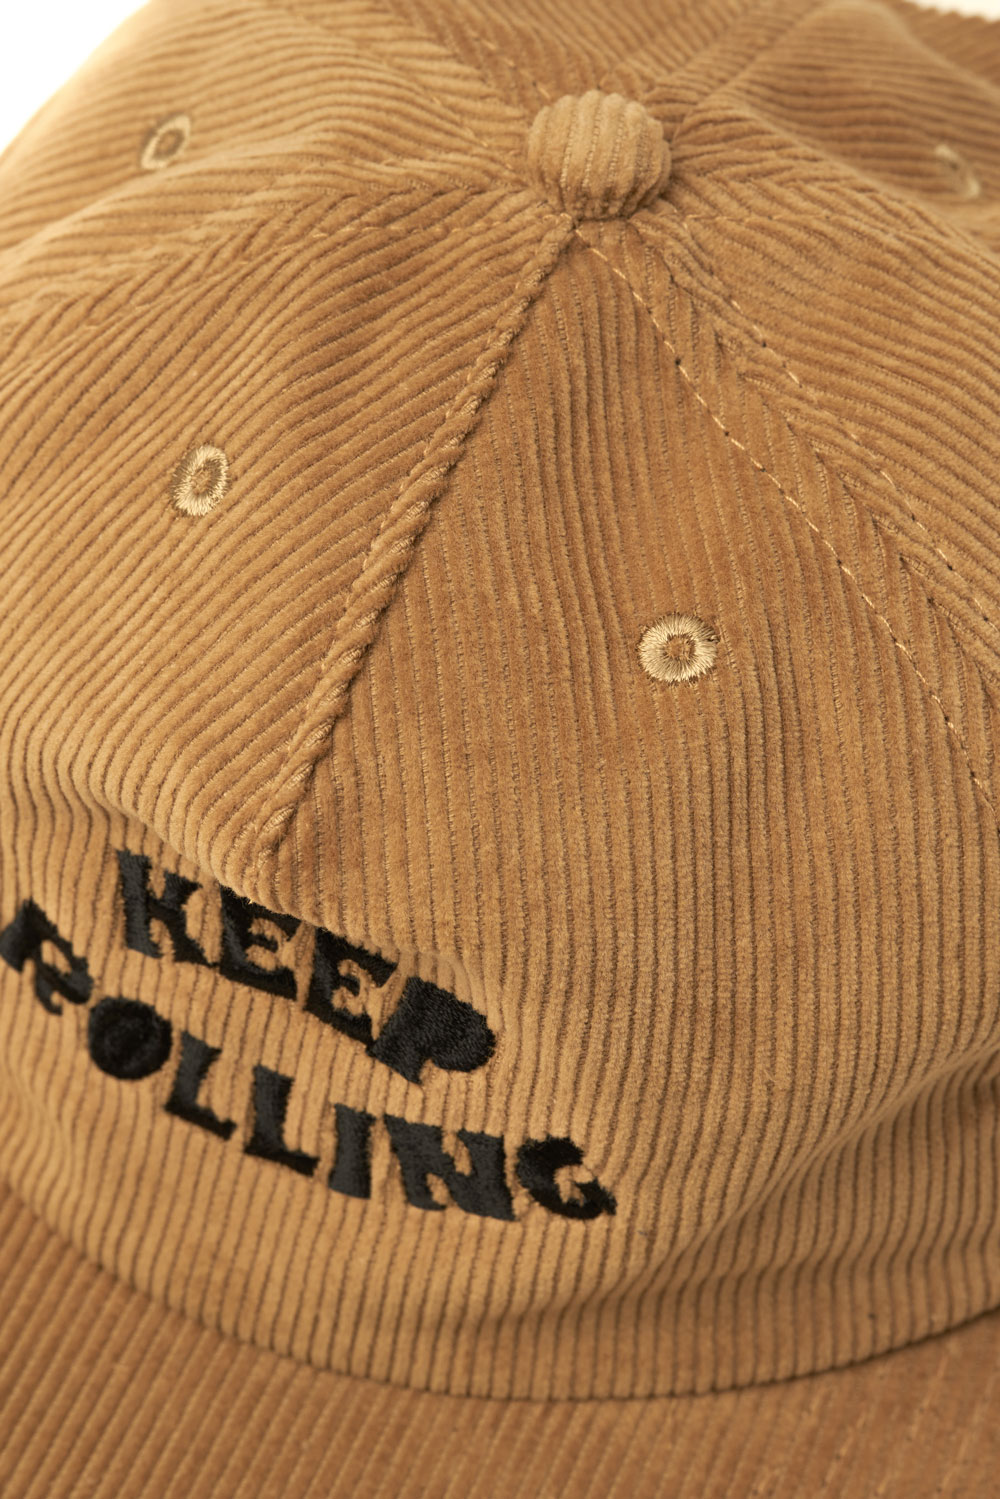 blank-miles-cap-keep-rolling-beige-front-detail